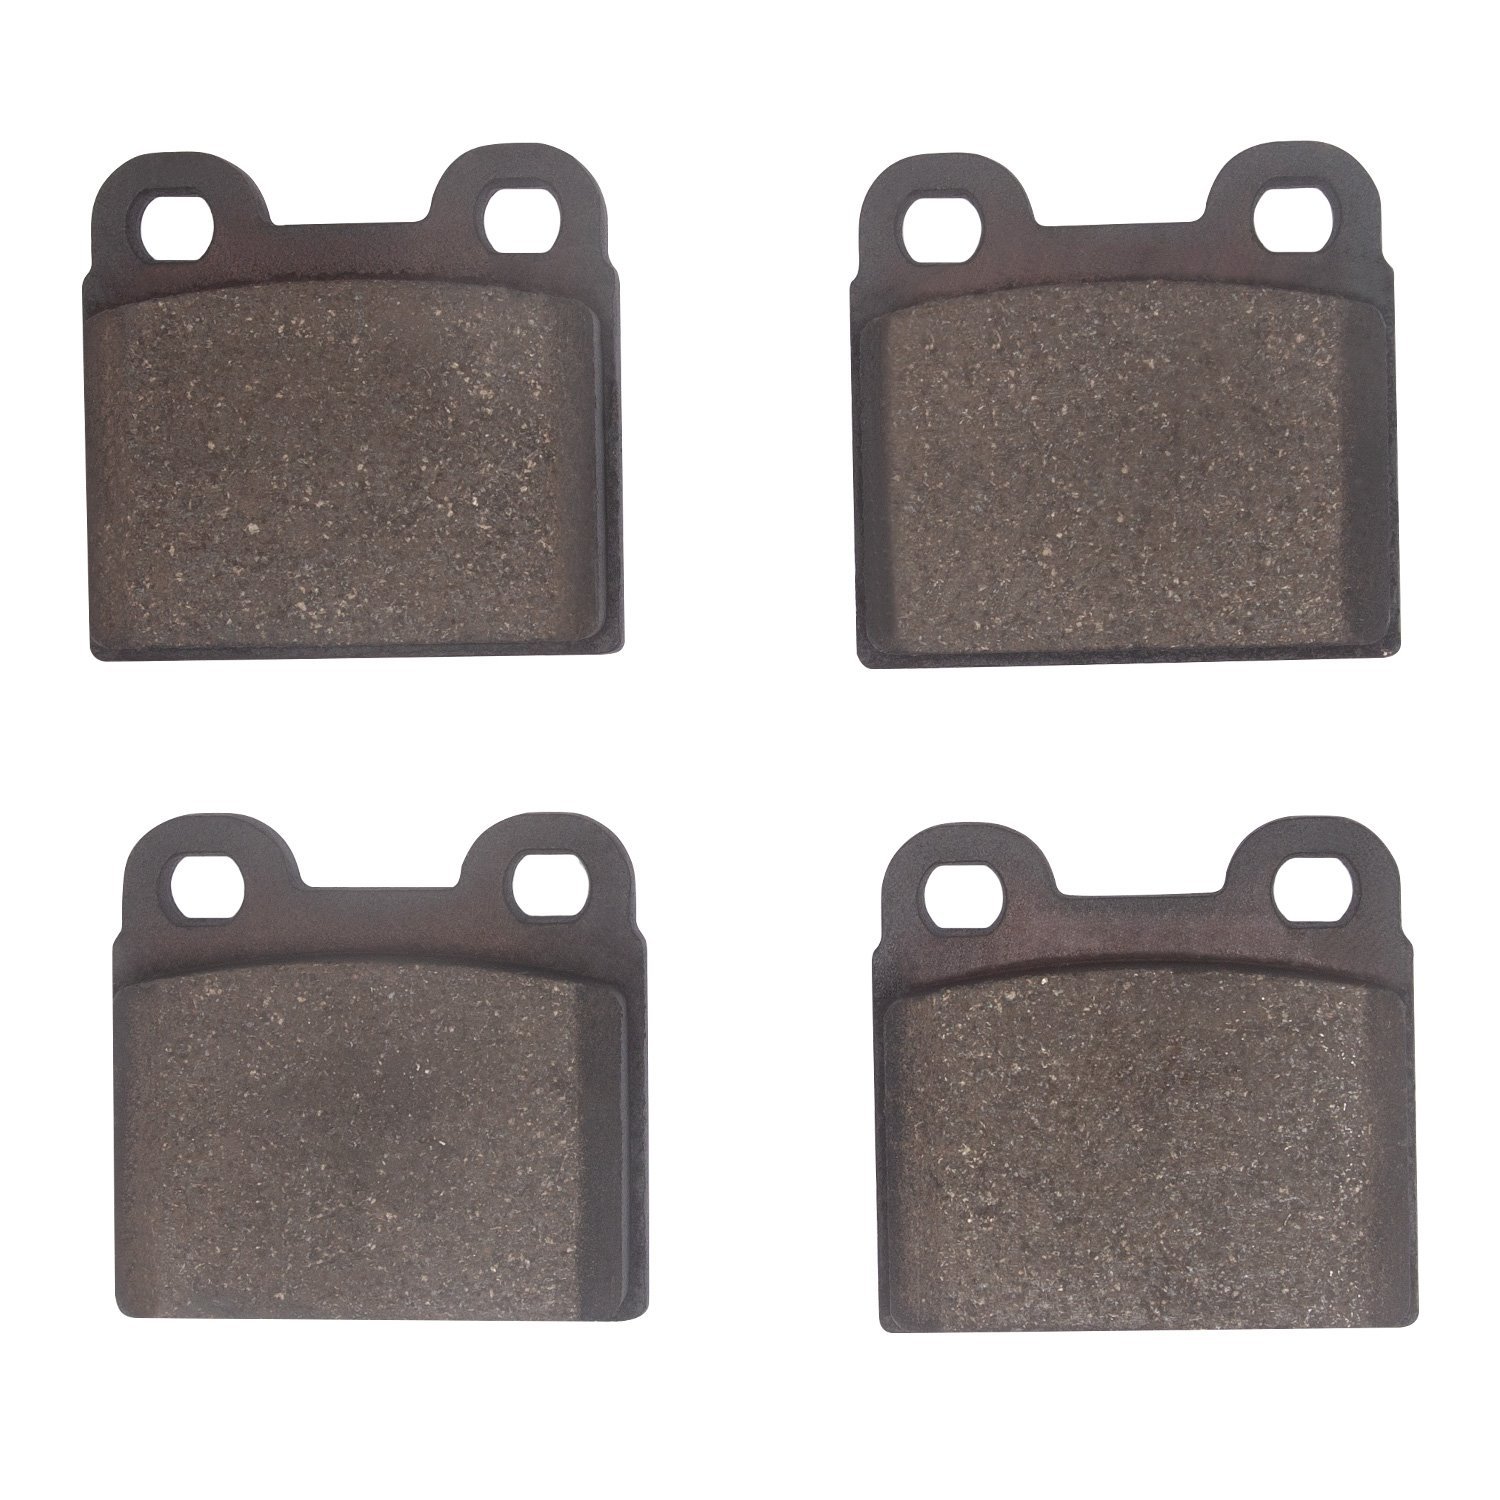 Euro Ceramic Brake Pads, 1963-1994 Fits Multiple Makes/Models, Position: Front & Rear